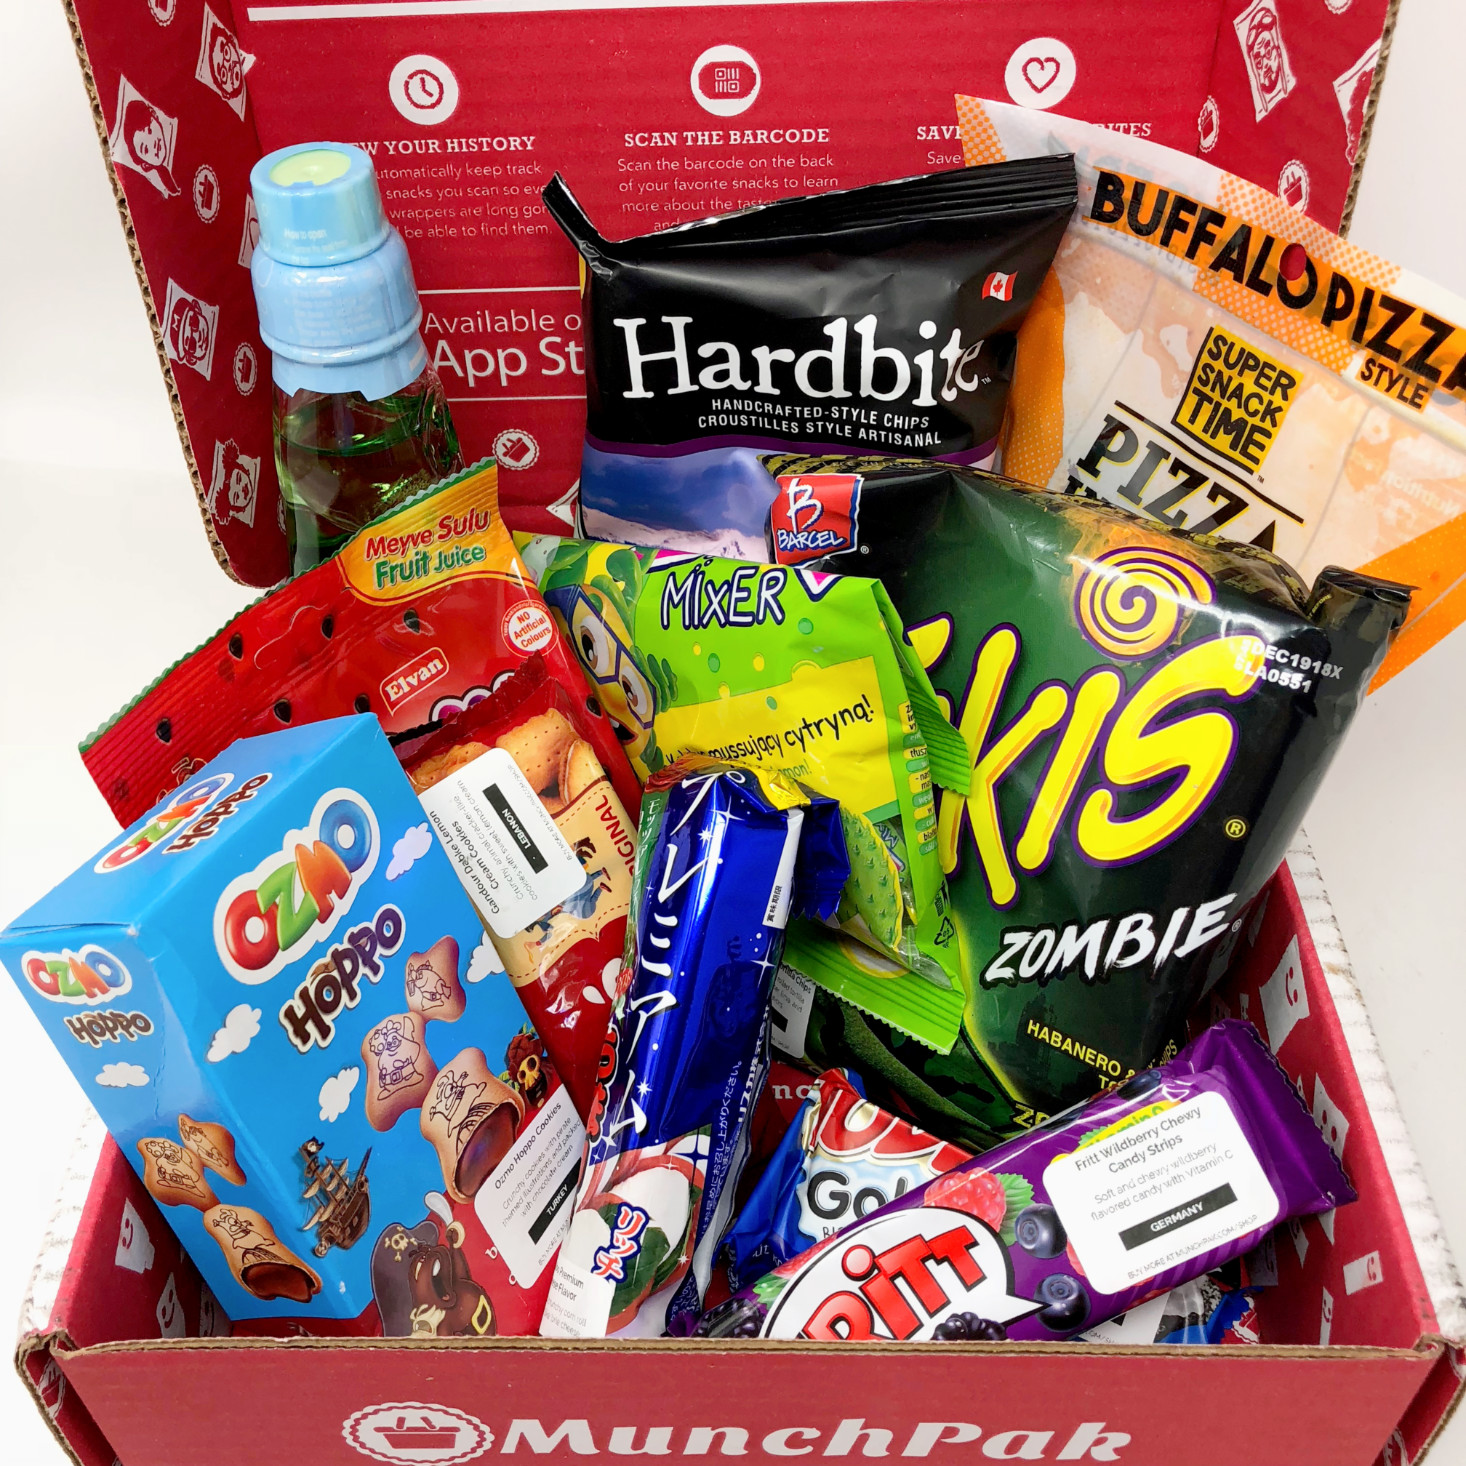 MunchPak Holiday 2021 Deal – Snag 33% Off On Snacks!